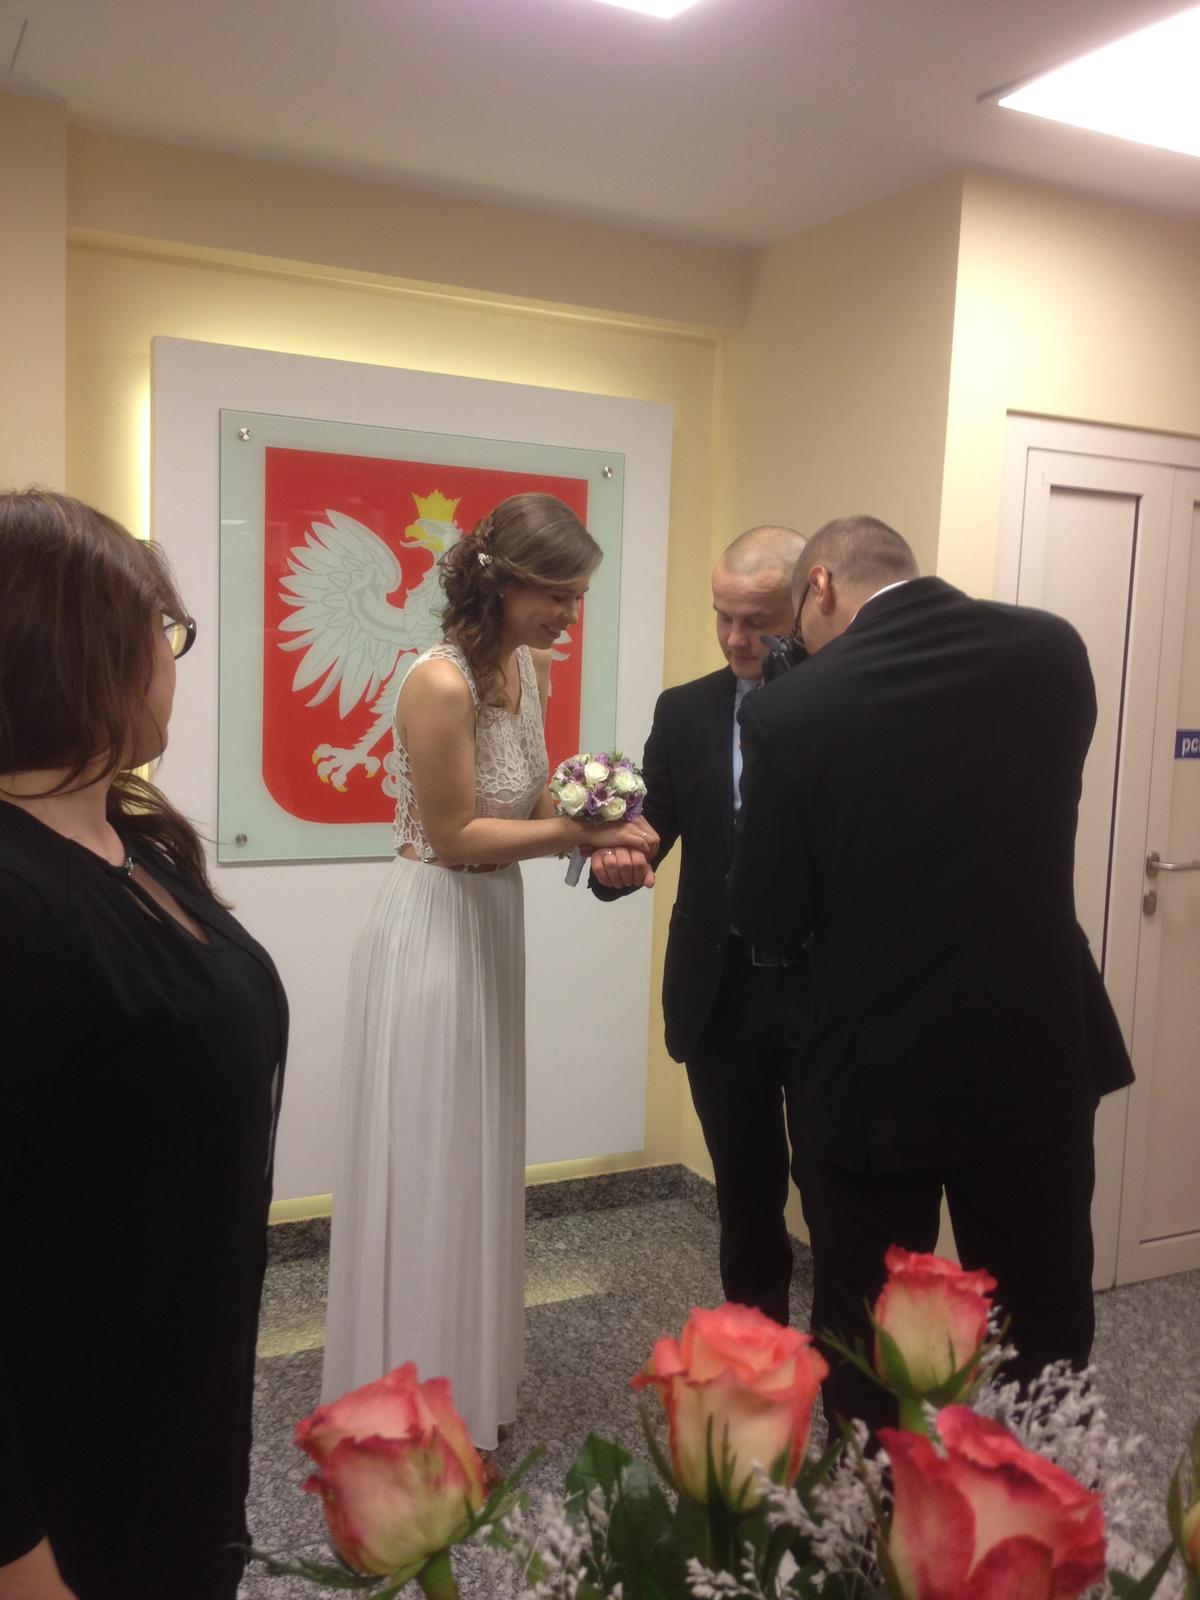 The couple's civil wedding ceremony. (Courtesy of <a href="https://www.instagram.com/equestriankasiabukowska/">Kasia Bukowska</a>)